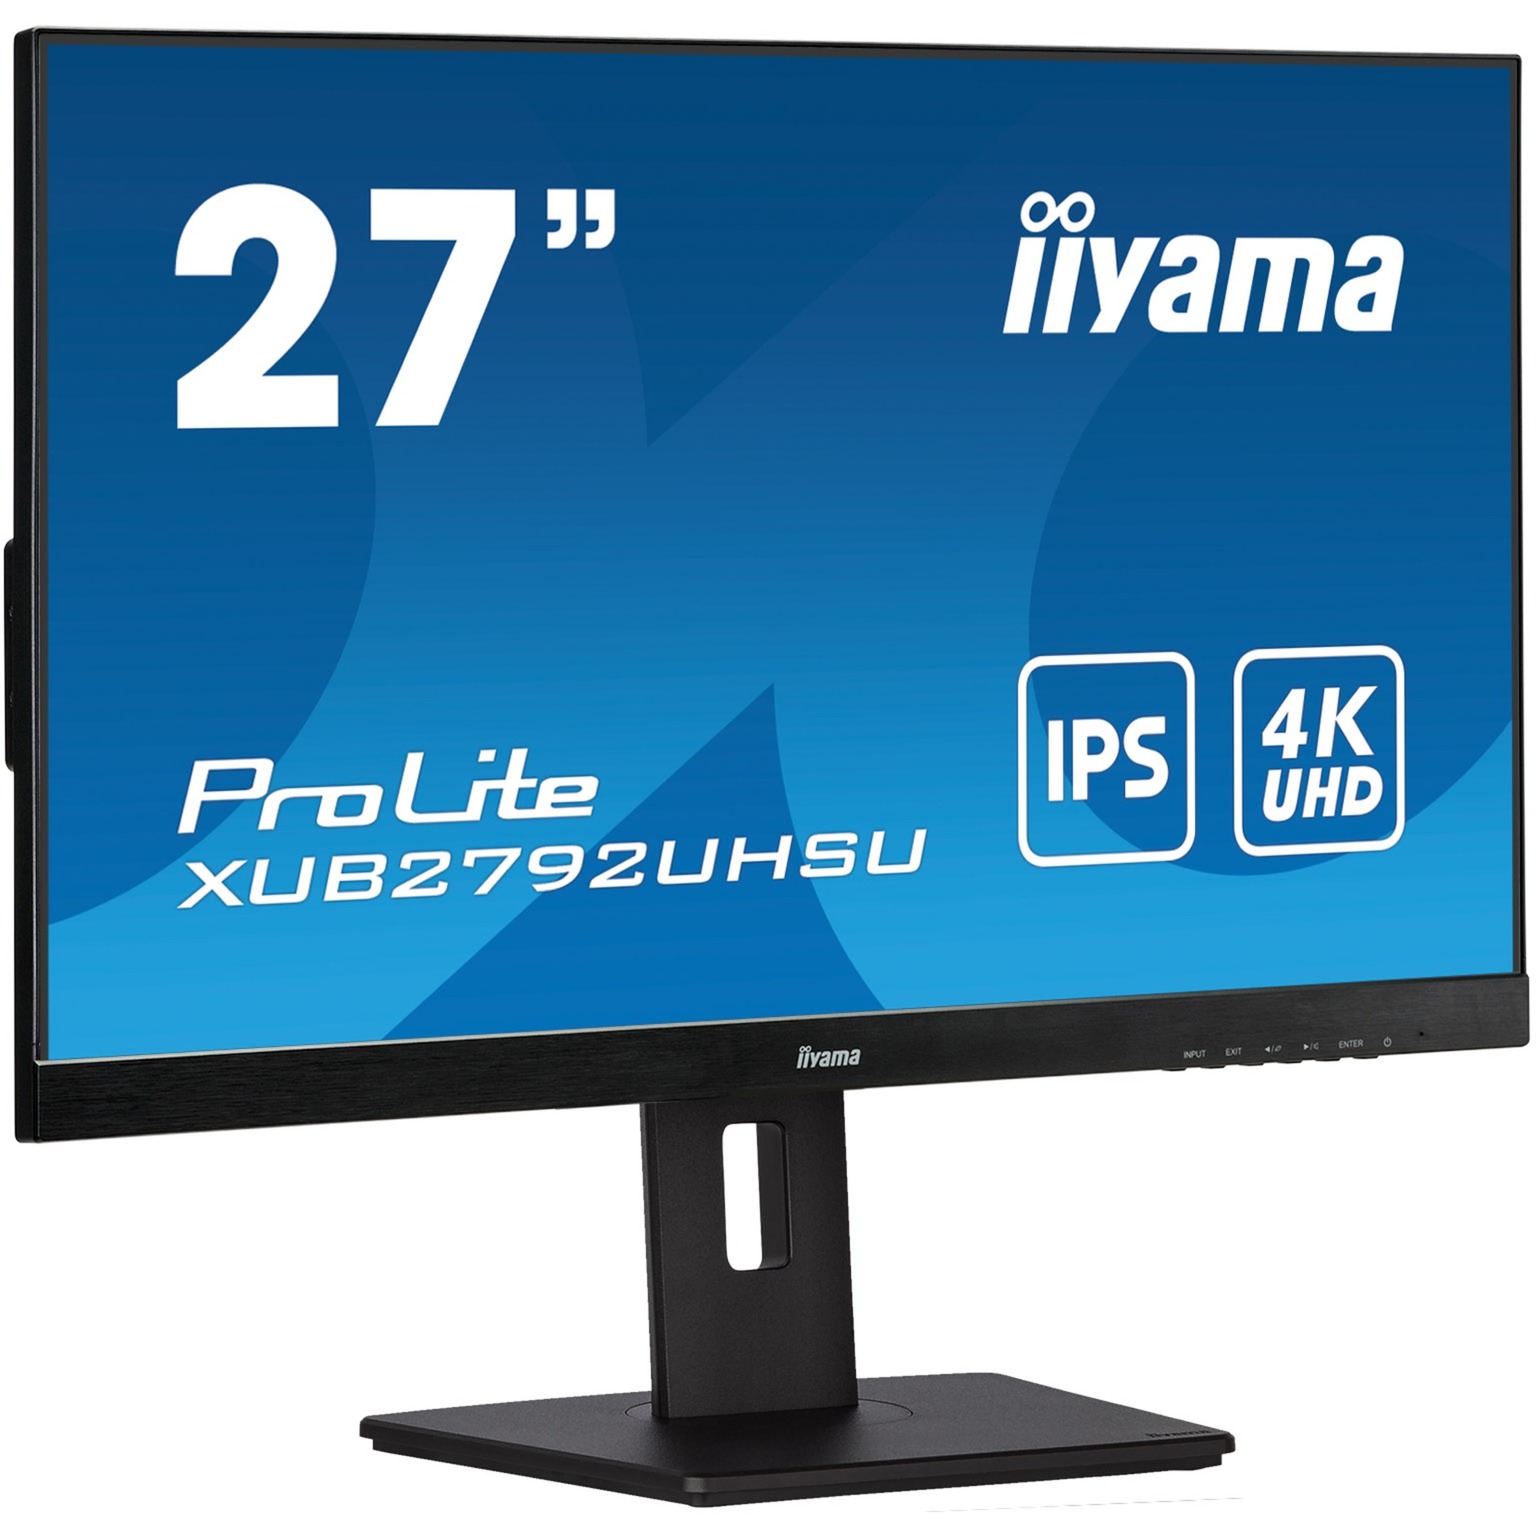 ProLite XUB2792UHSU-B5, LED-Monitor von Iiyama